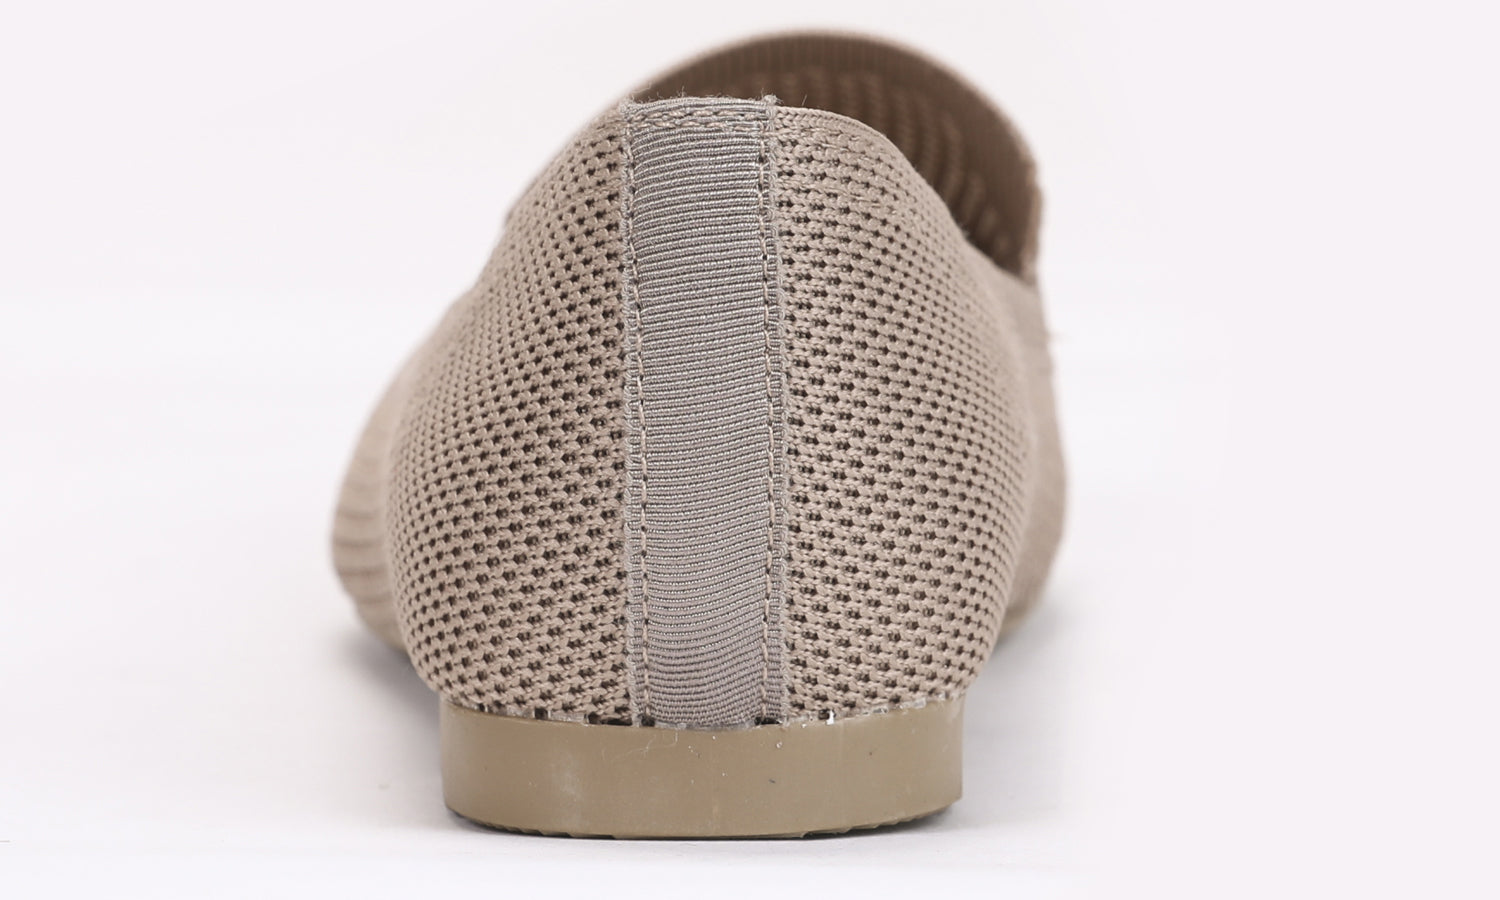 Feversole Women's Woven Fashion Breathable Knit Flat Shoes Khaki Loafer